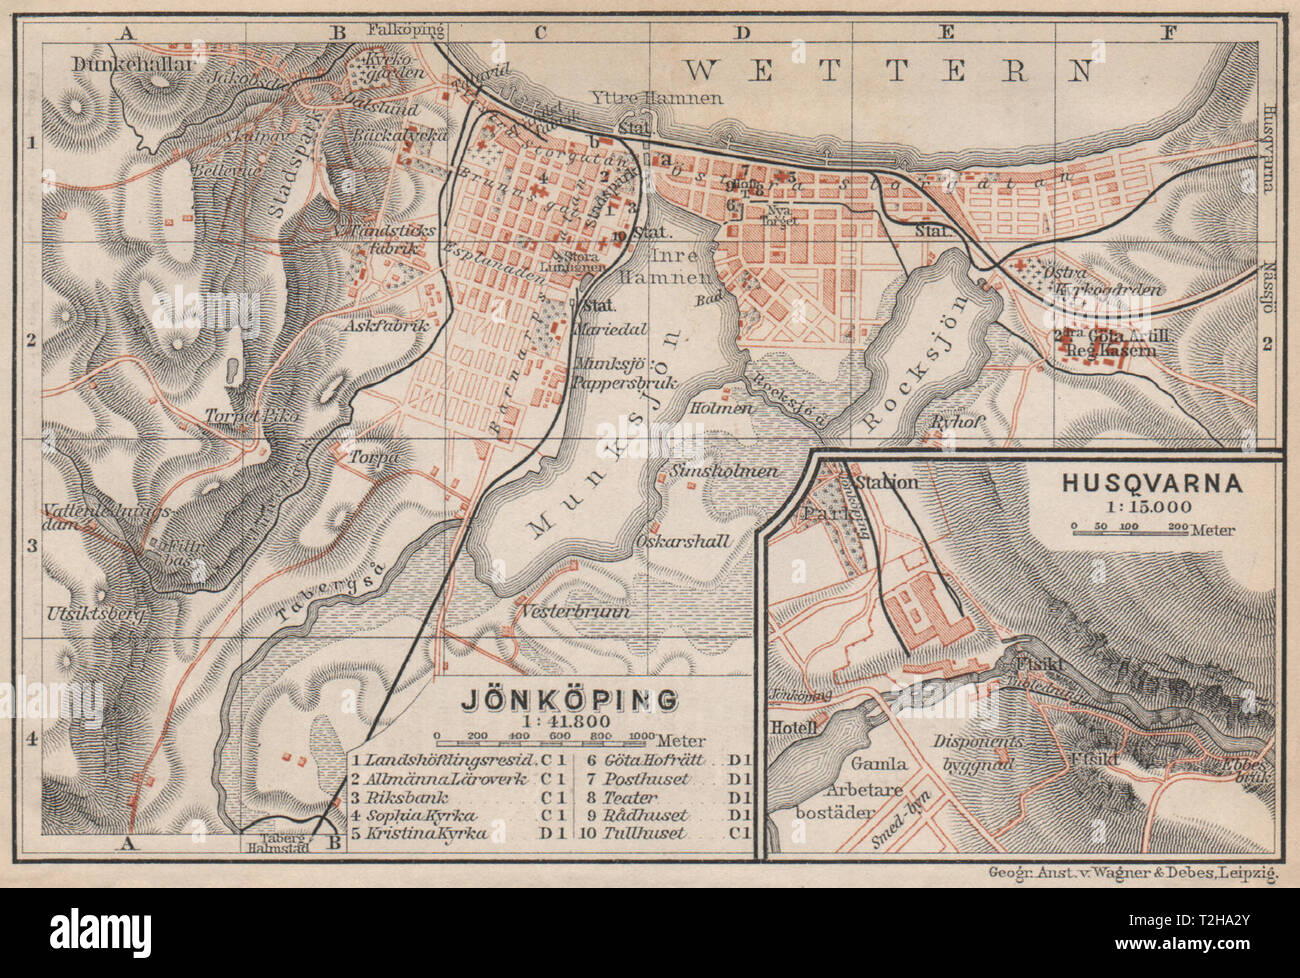 JONKOPING Jönköping town city stadsplan. Inset Huskvarna. Sweden karta 1899 map Stock Photo